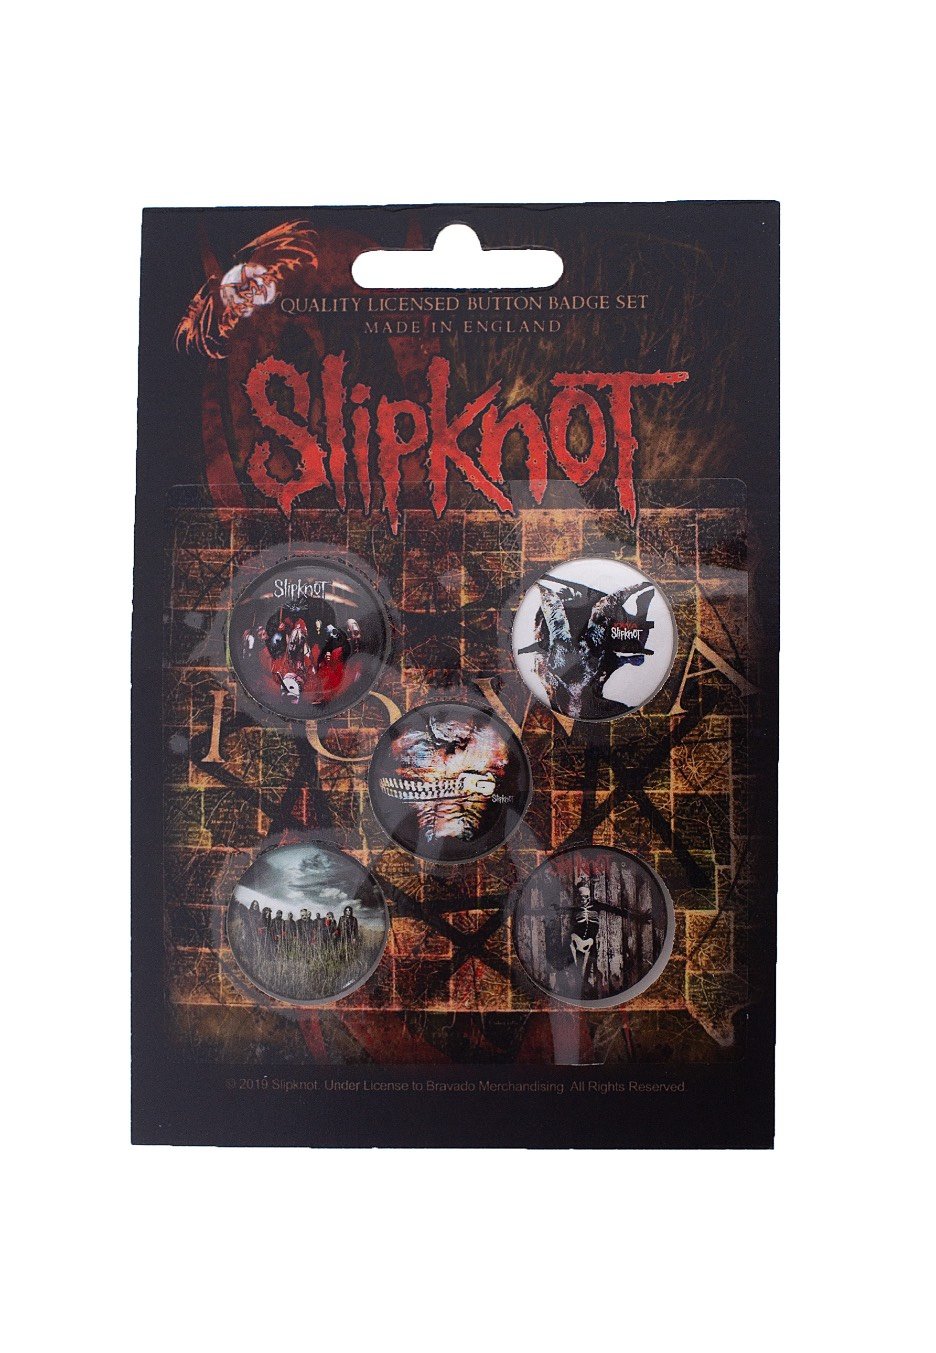 Slipknot - Albums Pack Of 5 - Button Set